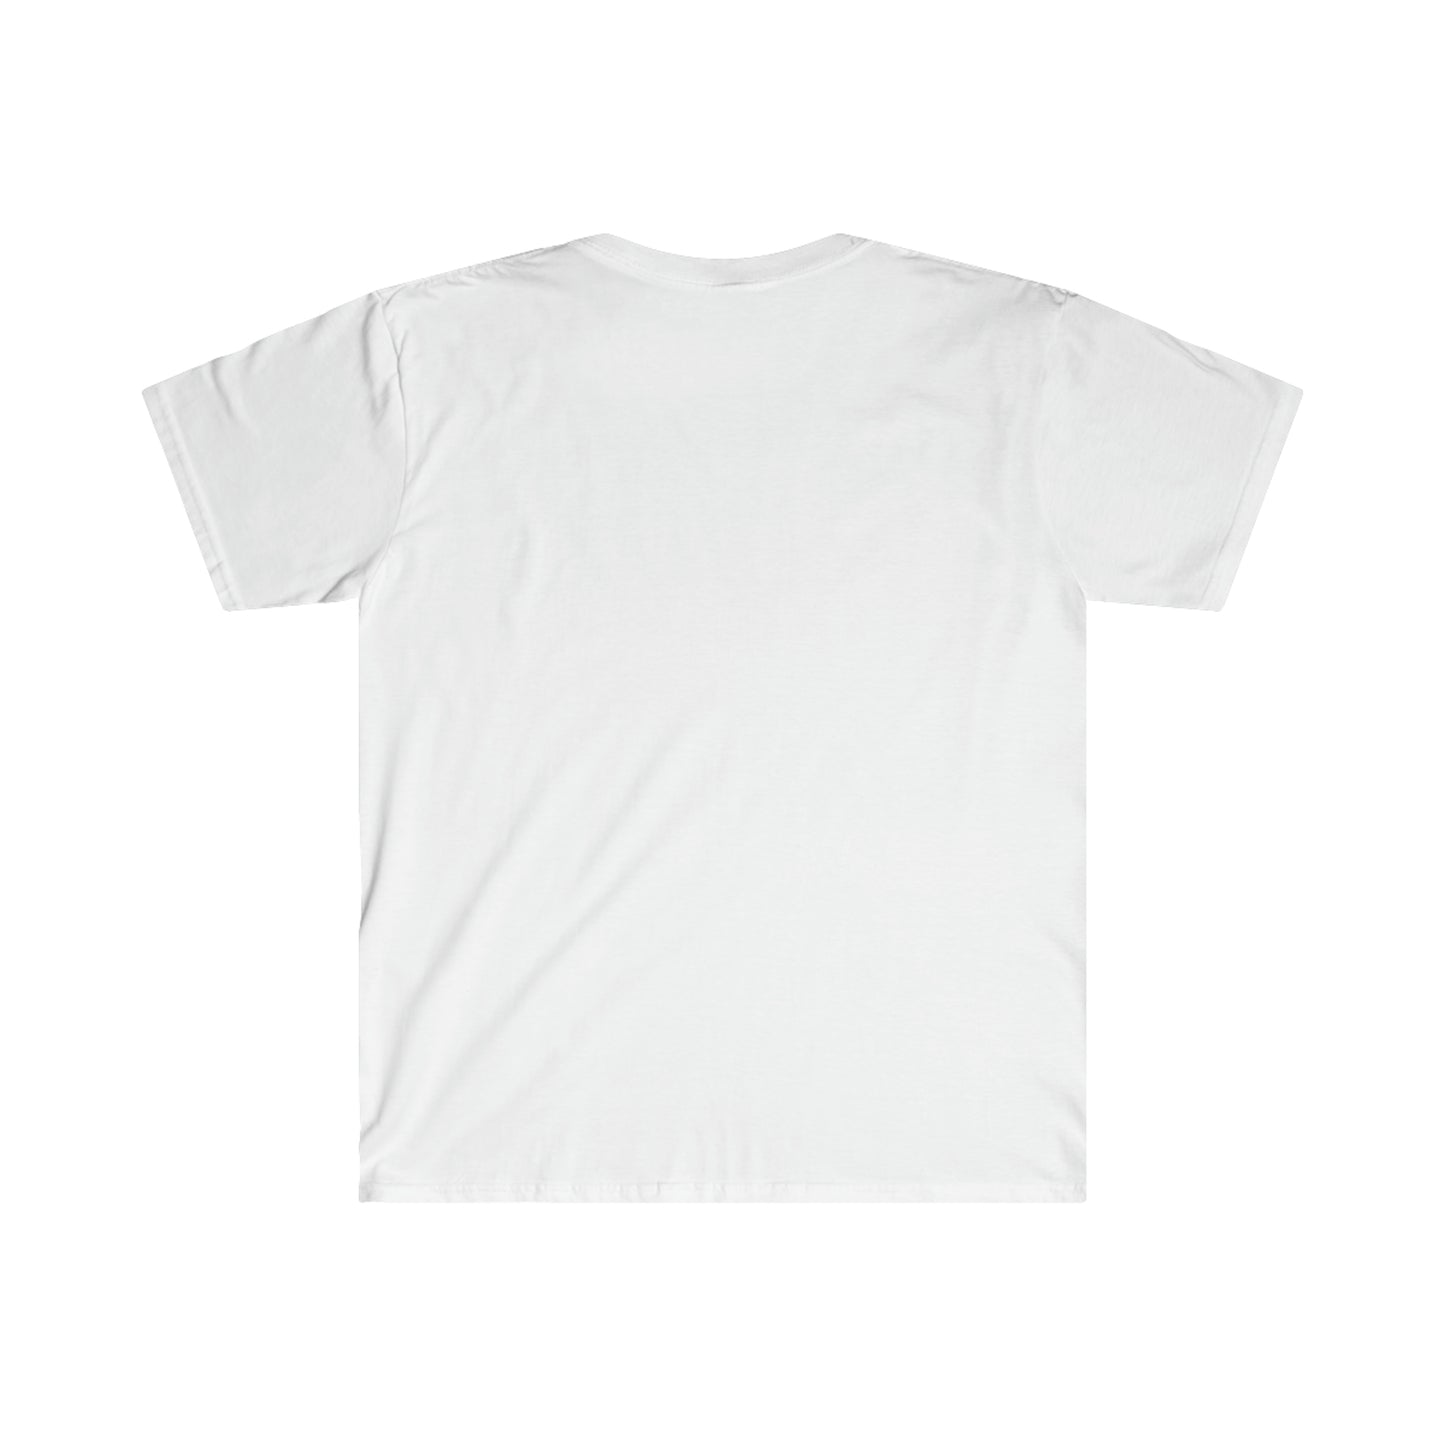 Unisex Stiky Fingers T-Shirt